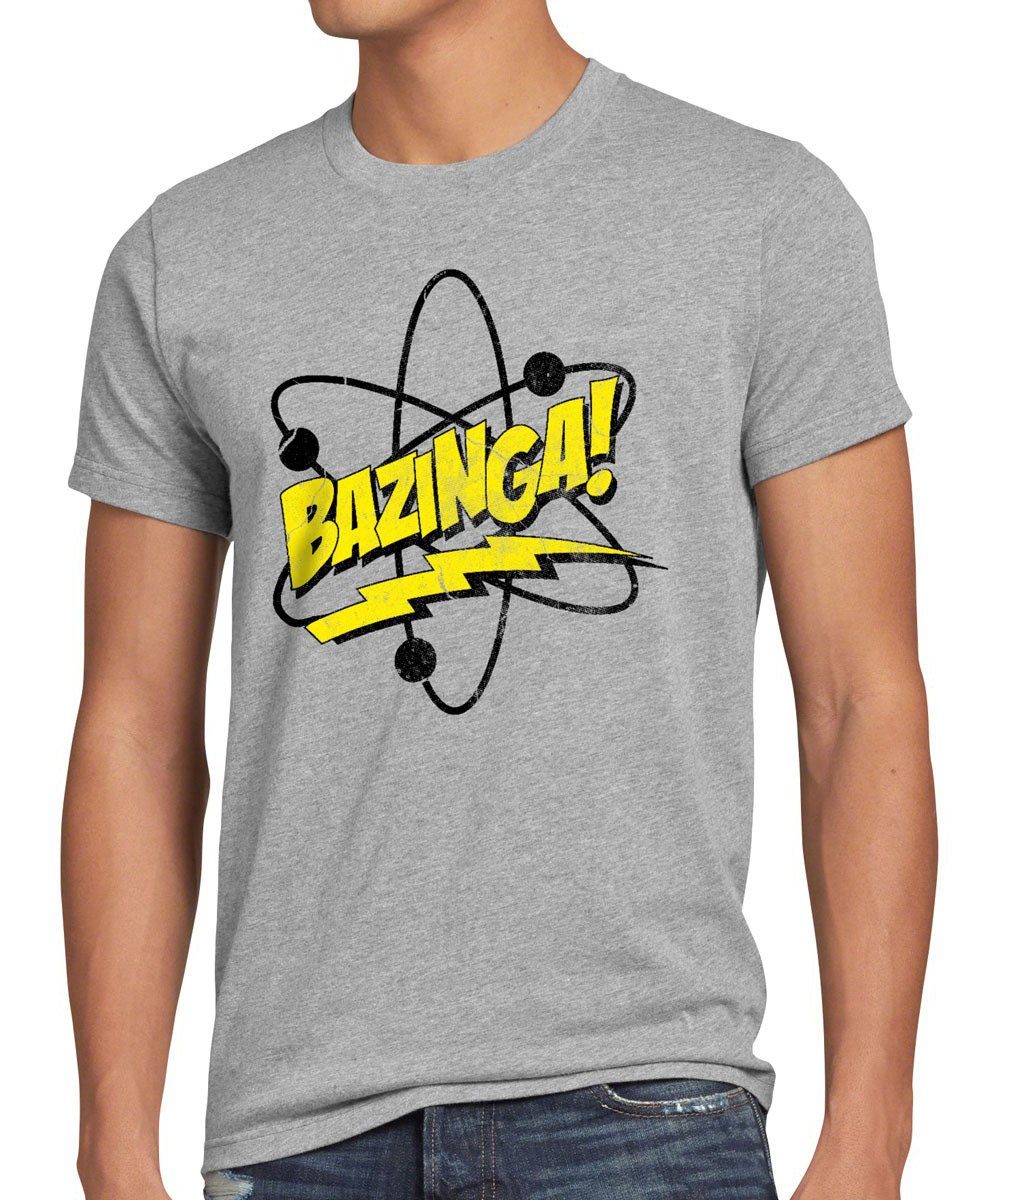 theory physik fan atom cooper Herren the bang meliert T-Shirt Sheldon Print-Shirt grau big Bazinga style3 leonard